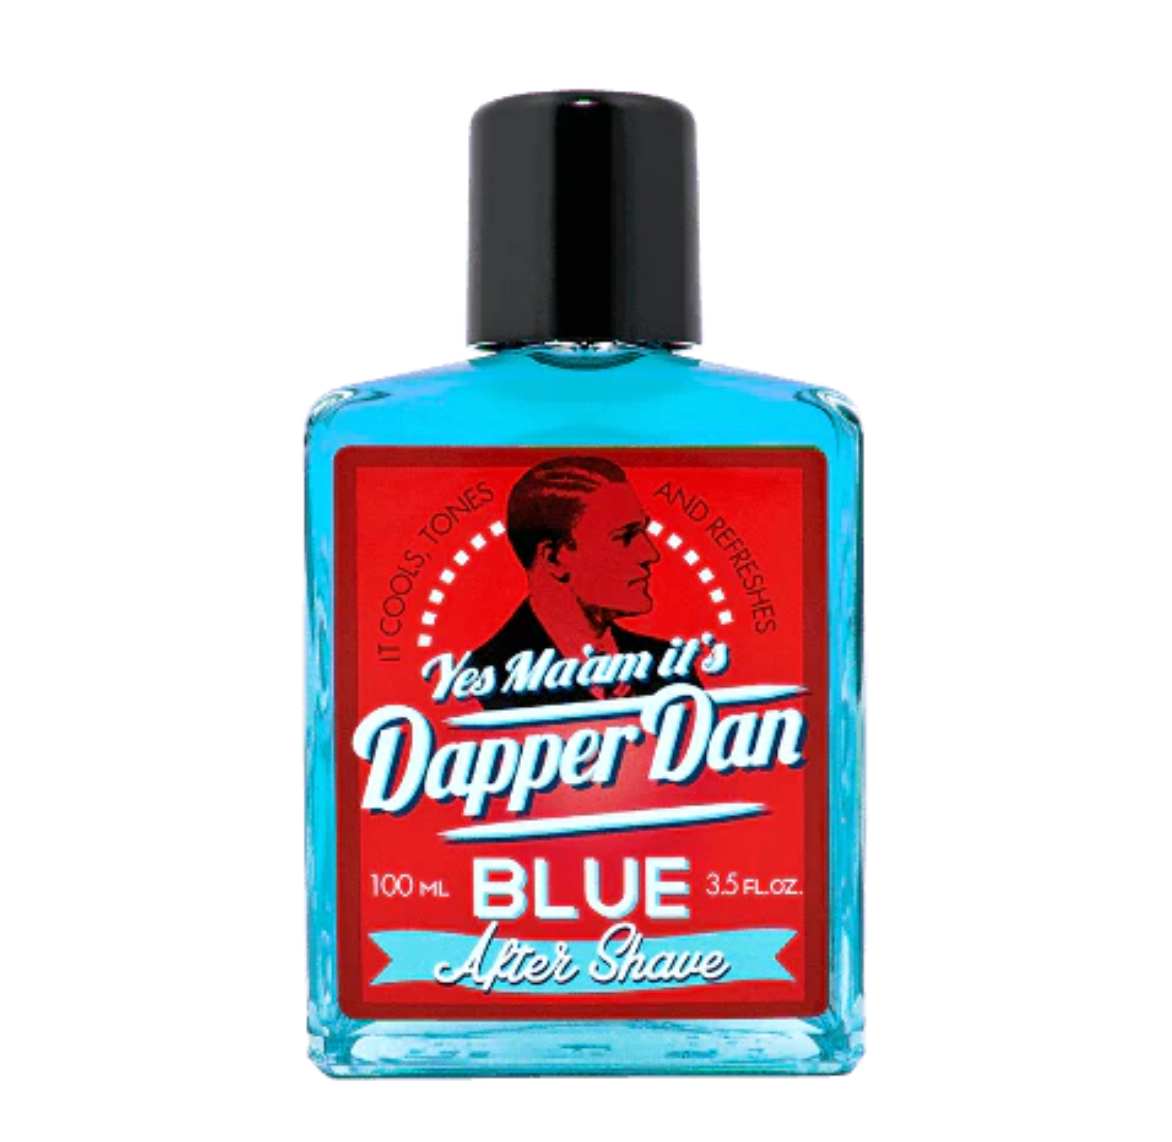 DAPPER DAN AFTER SHAVE “BLUE”